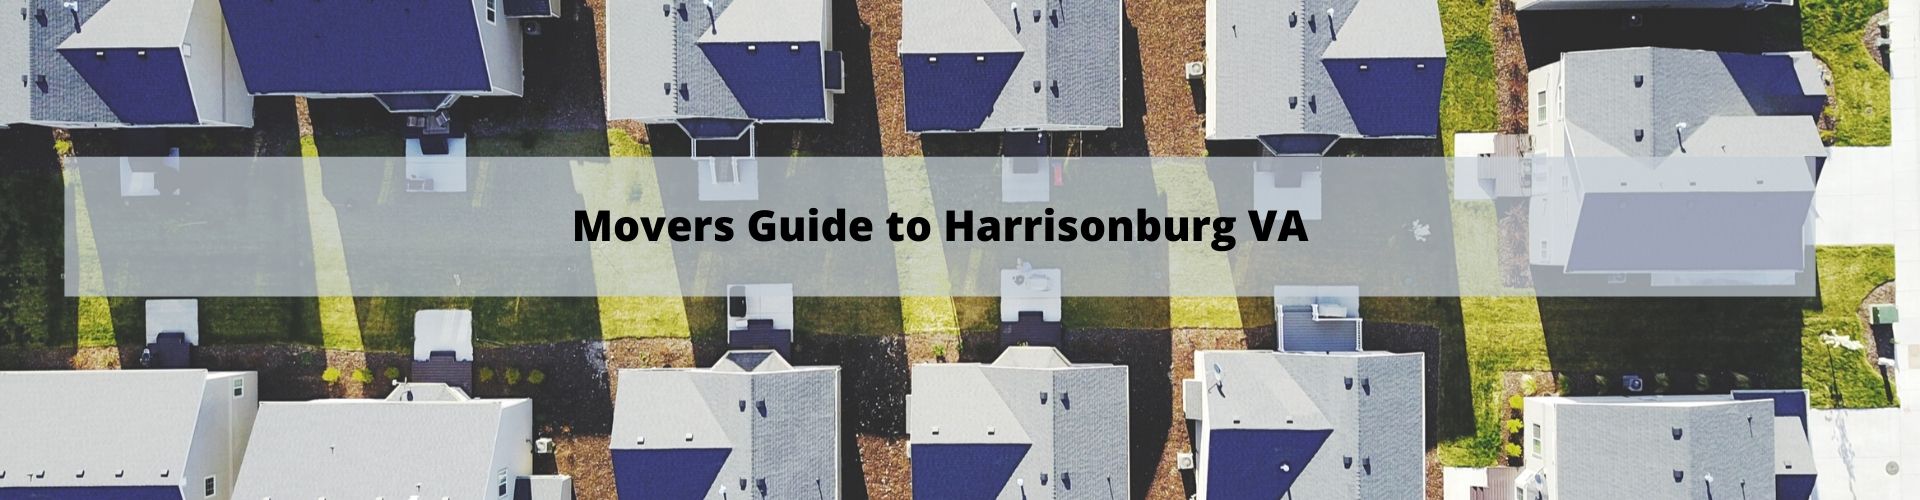 Mover's Guide to Harrisonburg VA